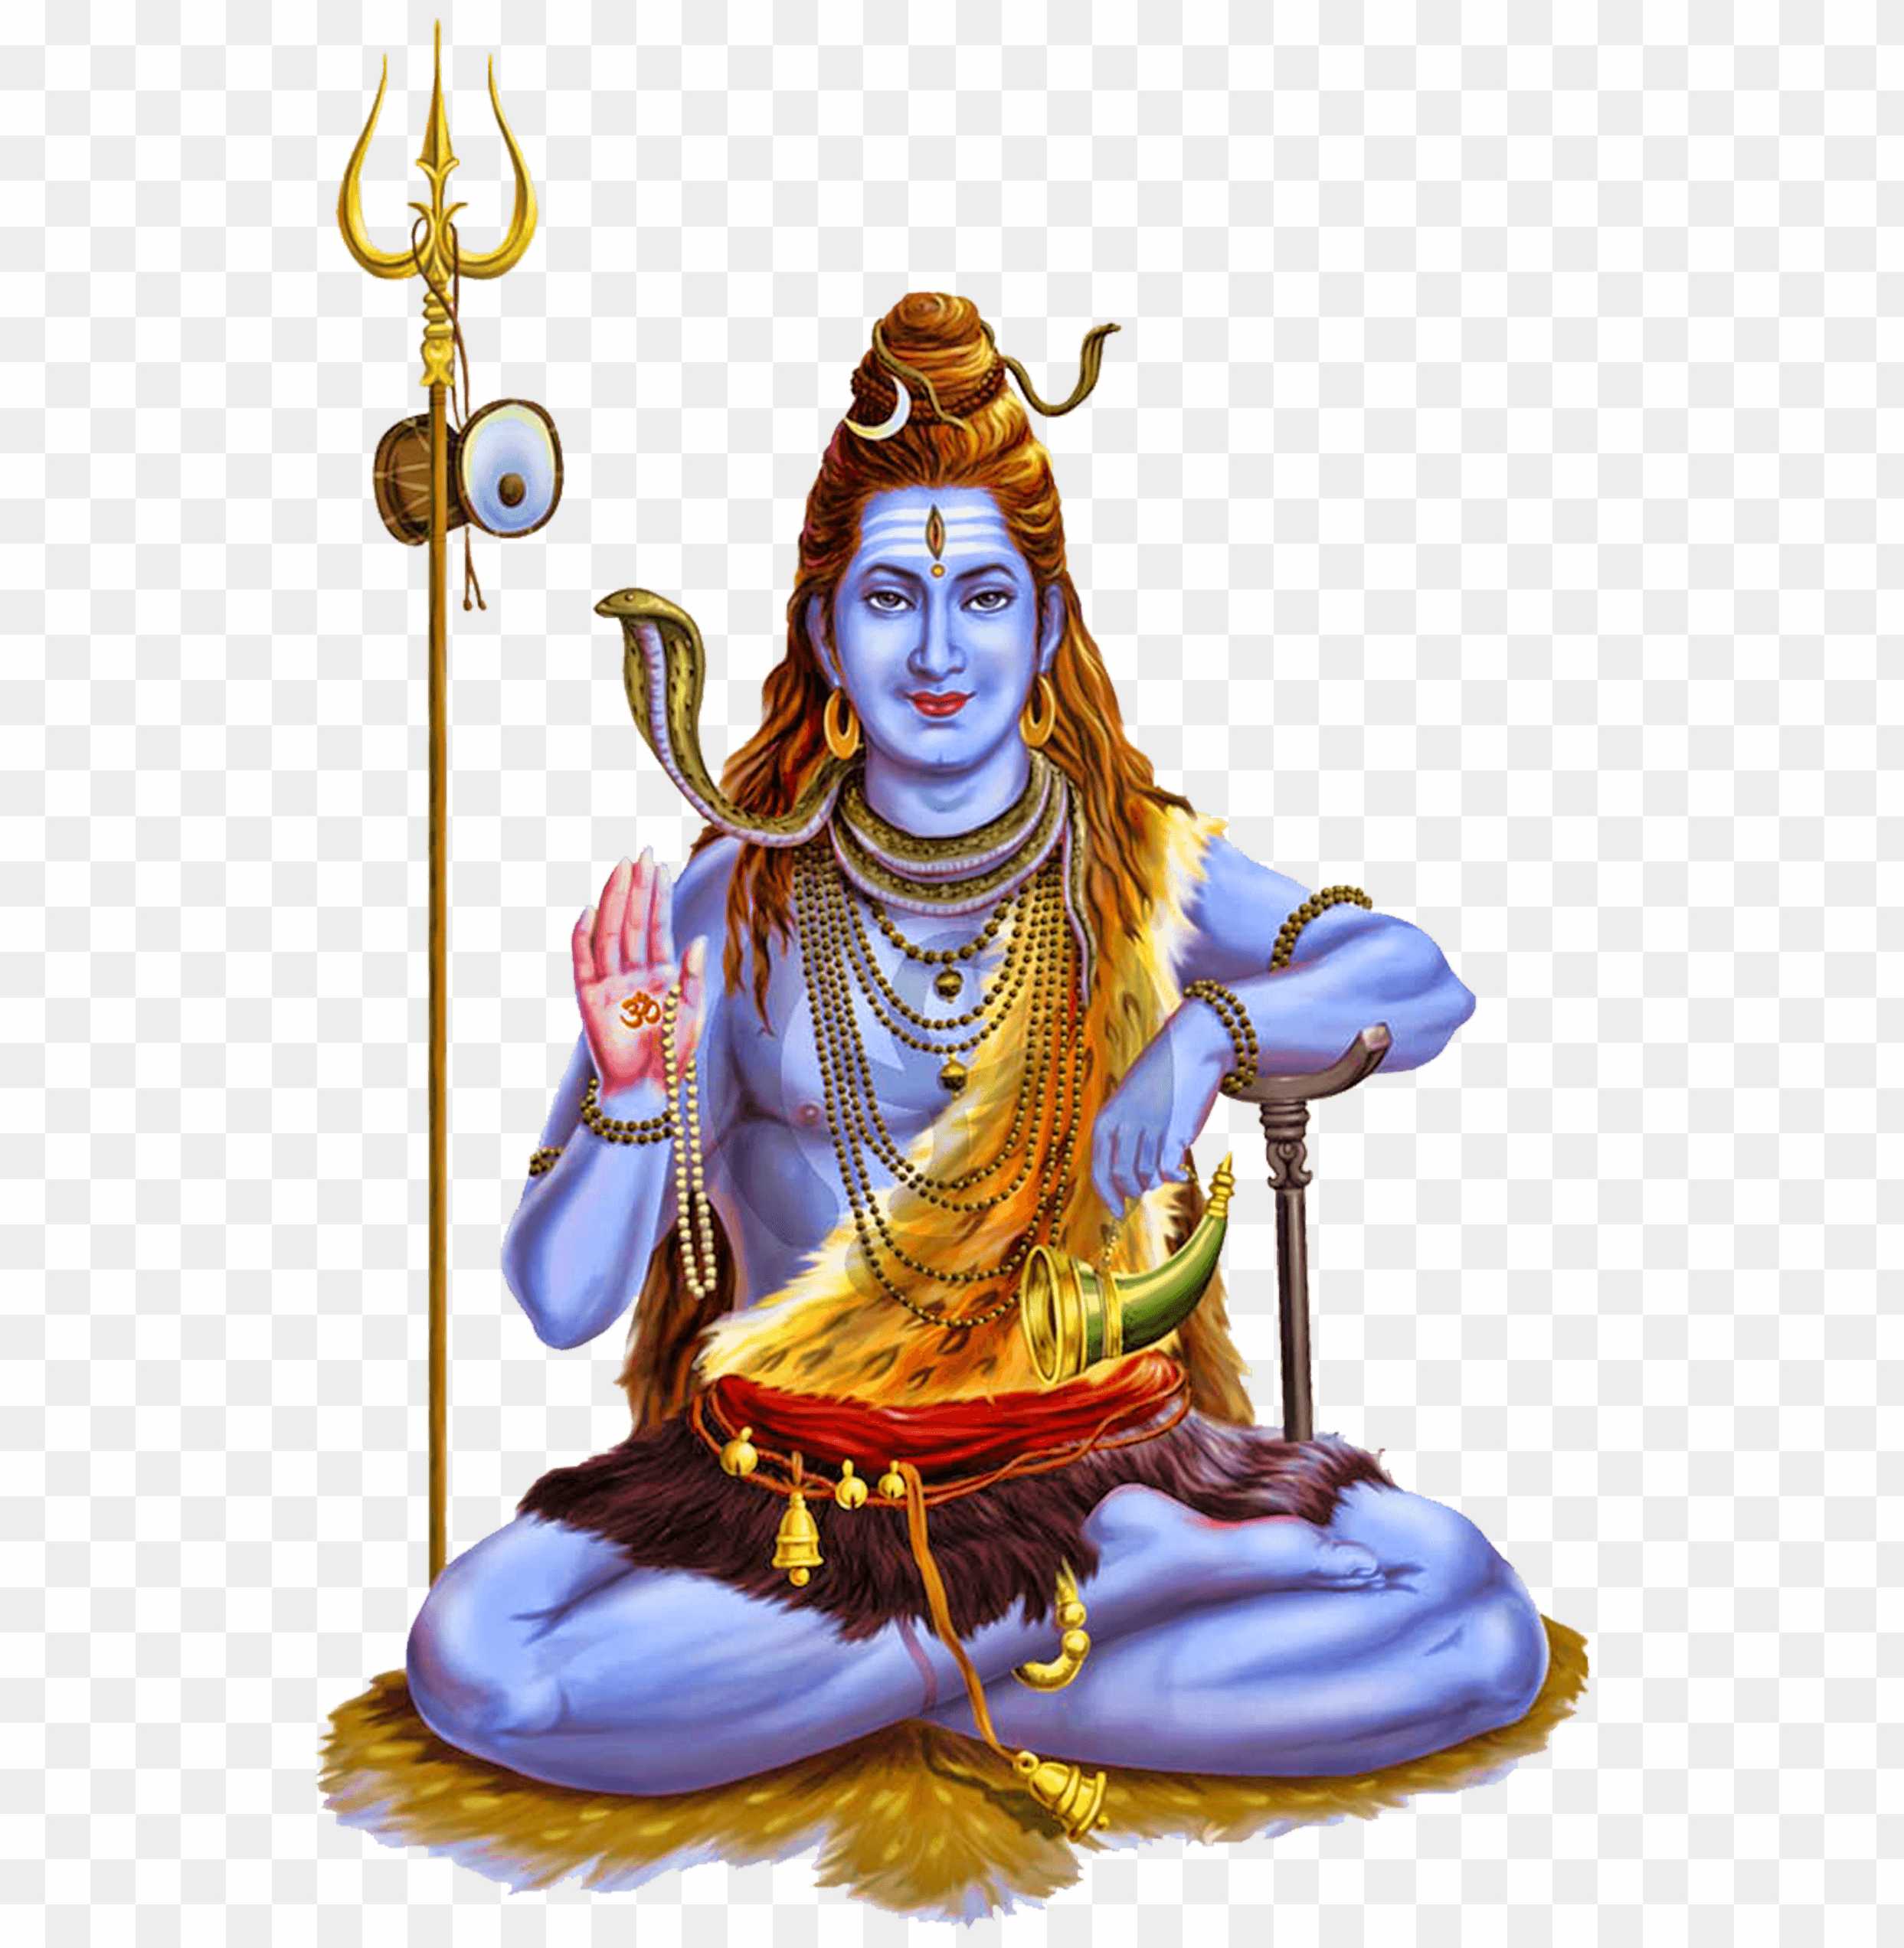 Lord Shiva PNG, Gods PNG, Mahakal png, Lord Shiva PNG Transparent Images